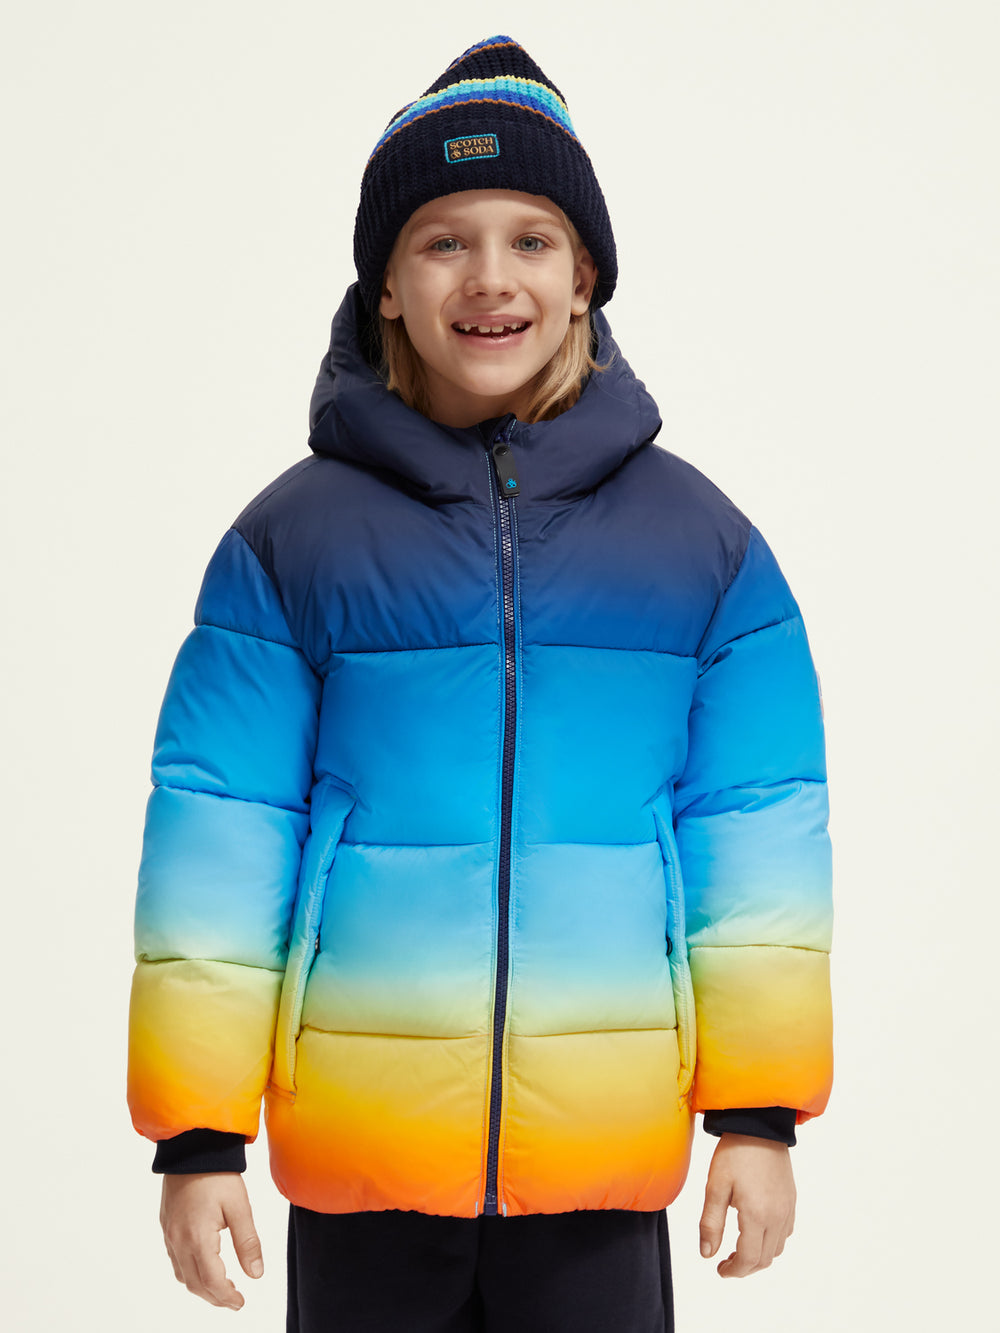 Kids - Colourful padded jacket - Scotch & Soda NZ